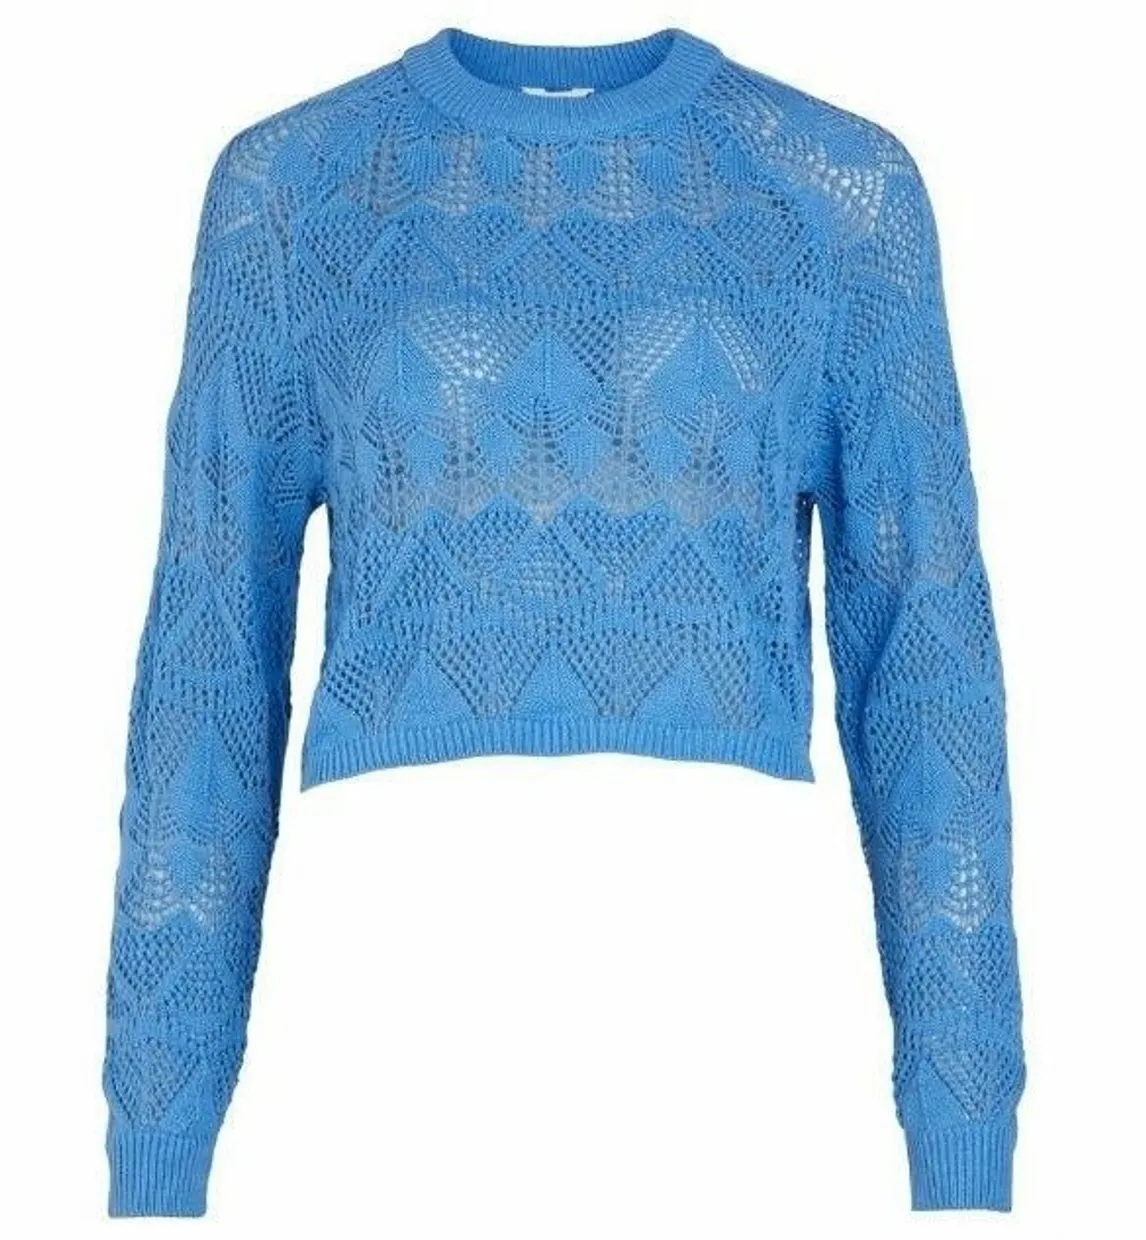 Bailey knit top marina blue